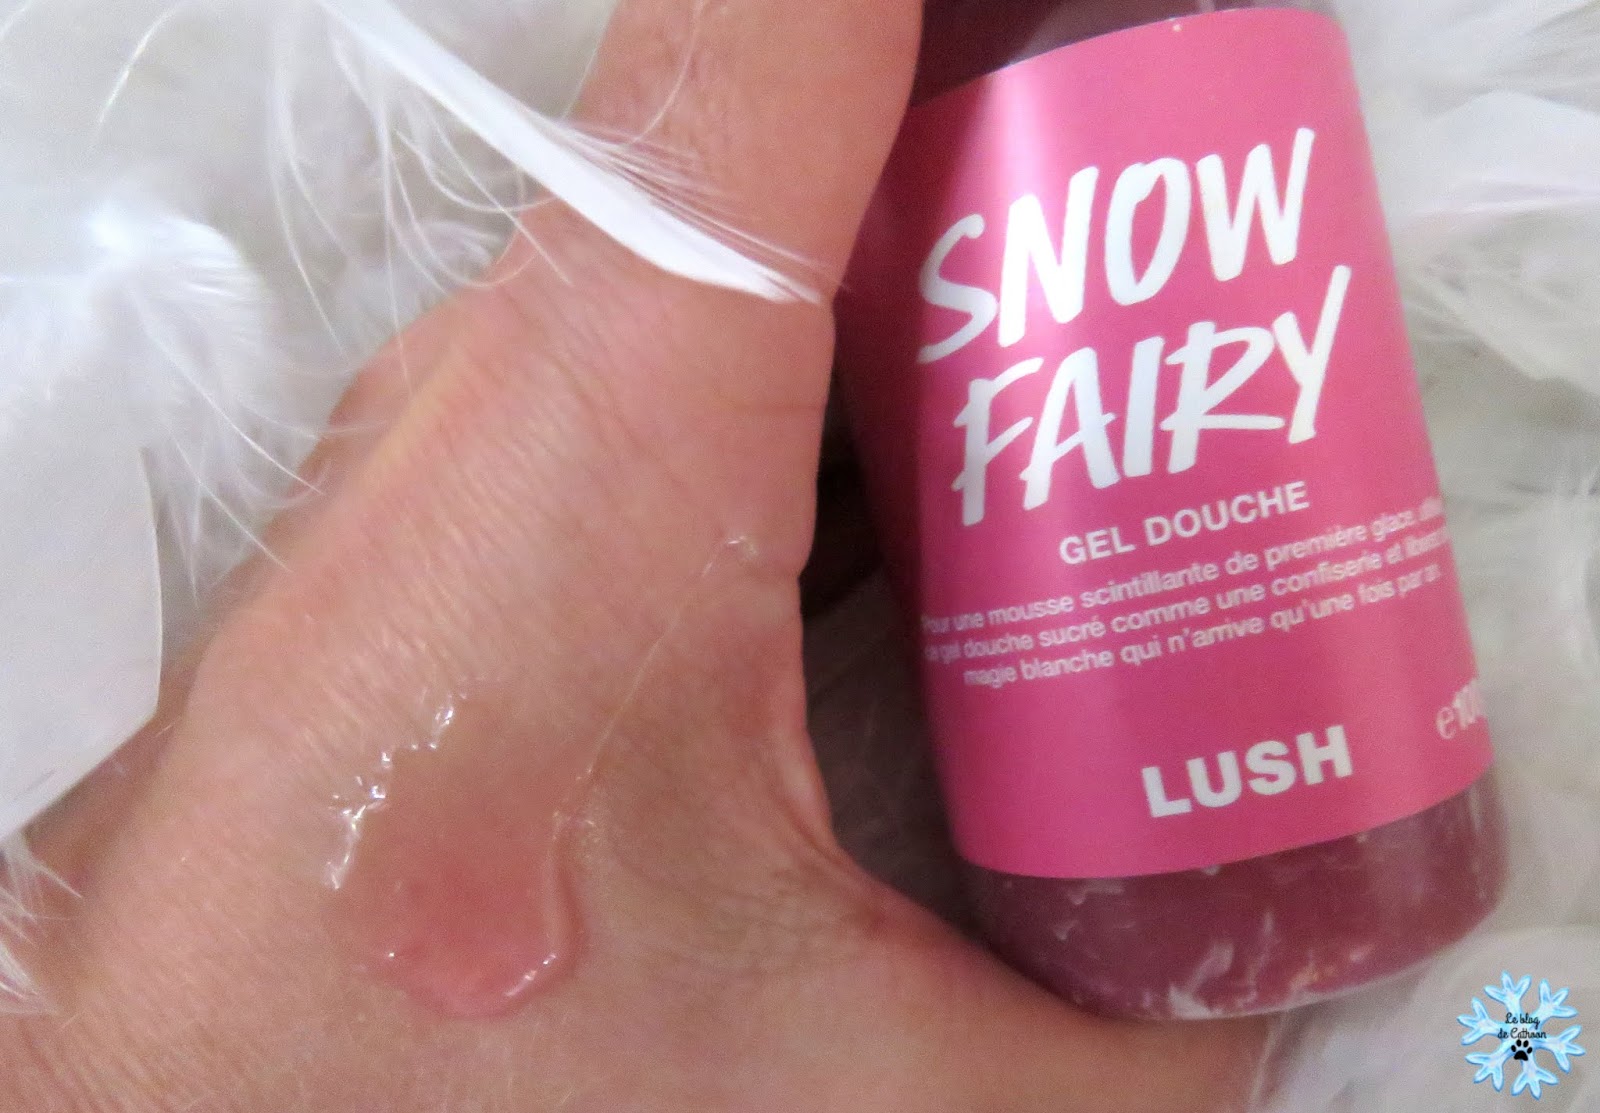 Snow Fairy - Gel Douche - Collection Noël - Lush